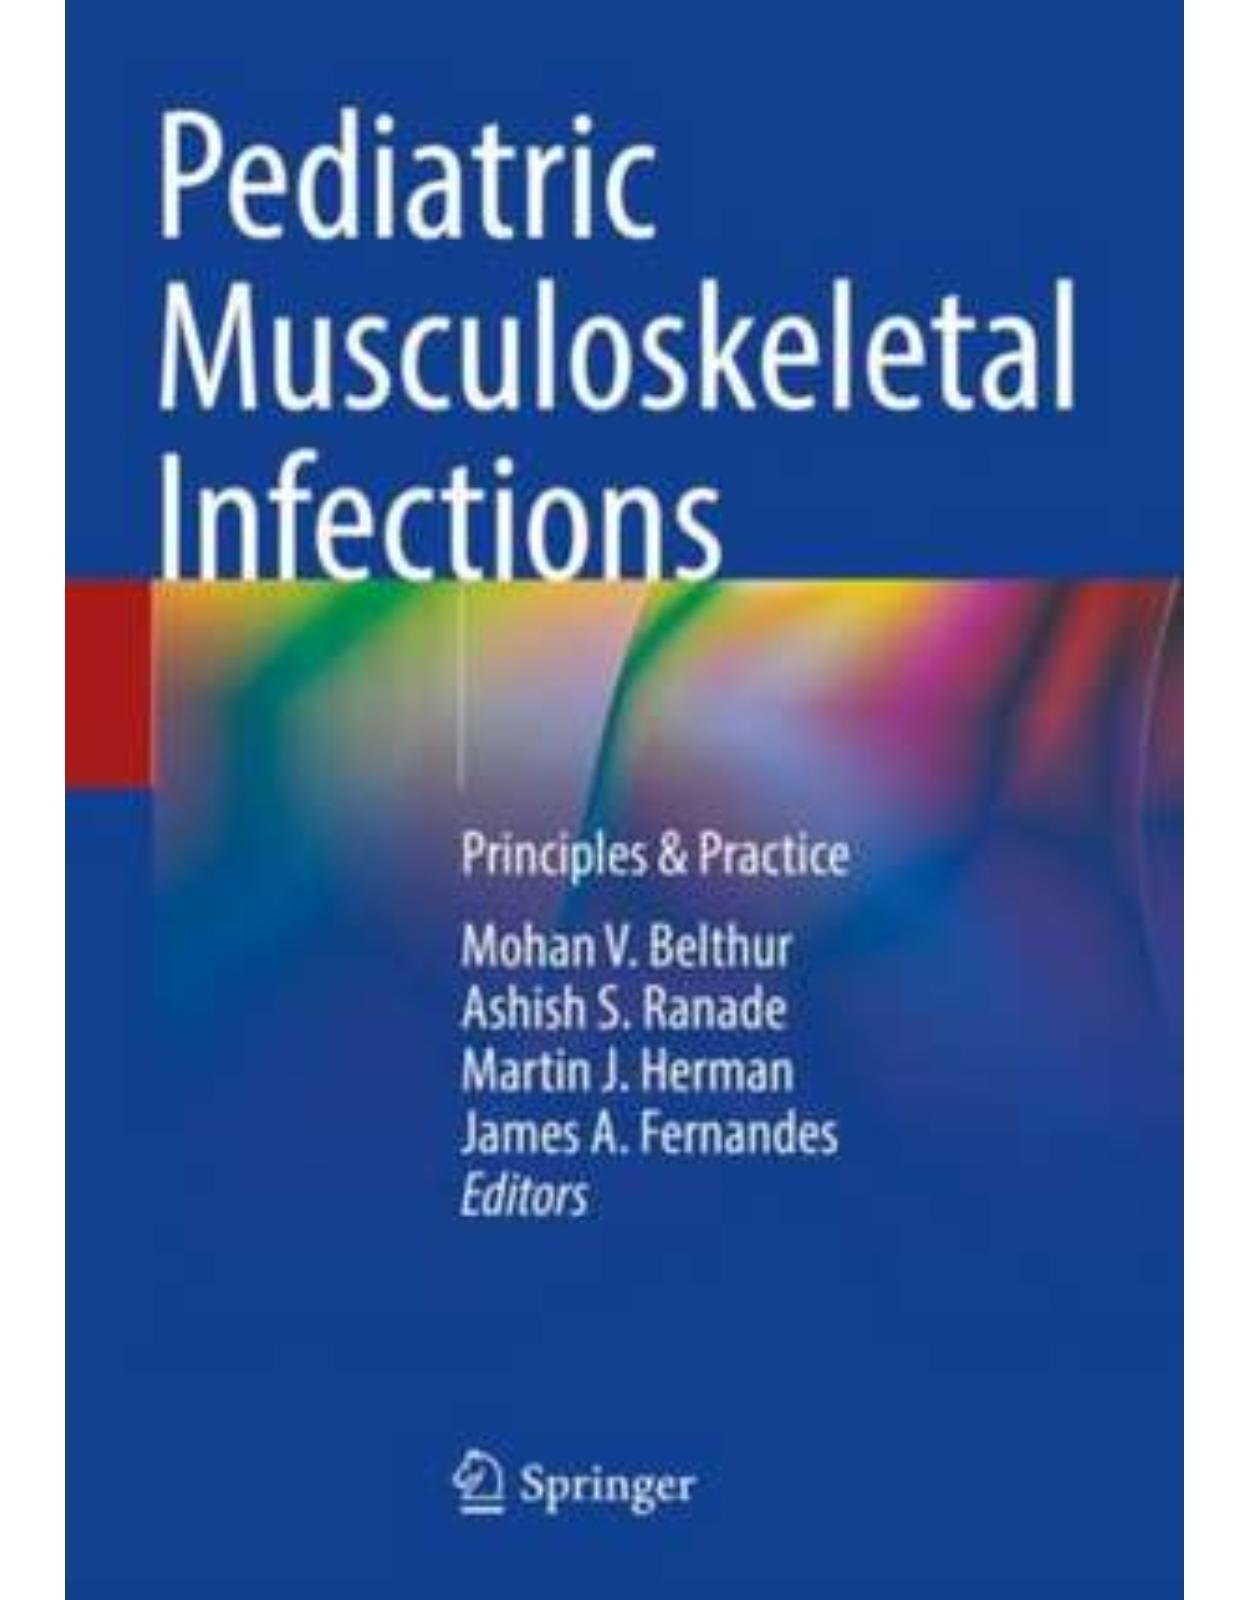 Pediatric Musculoskeletal Infections: Principles & Practice